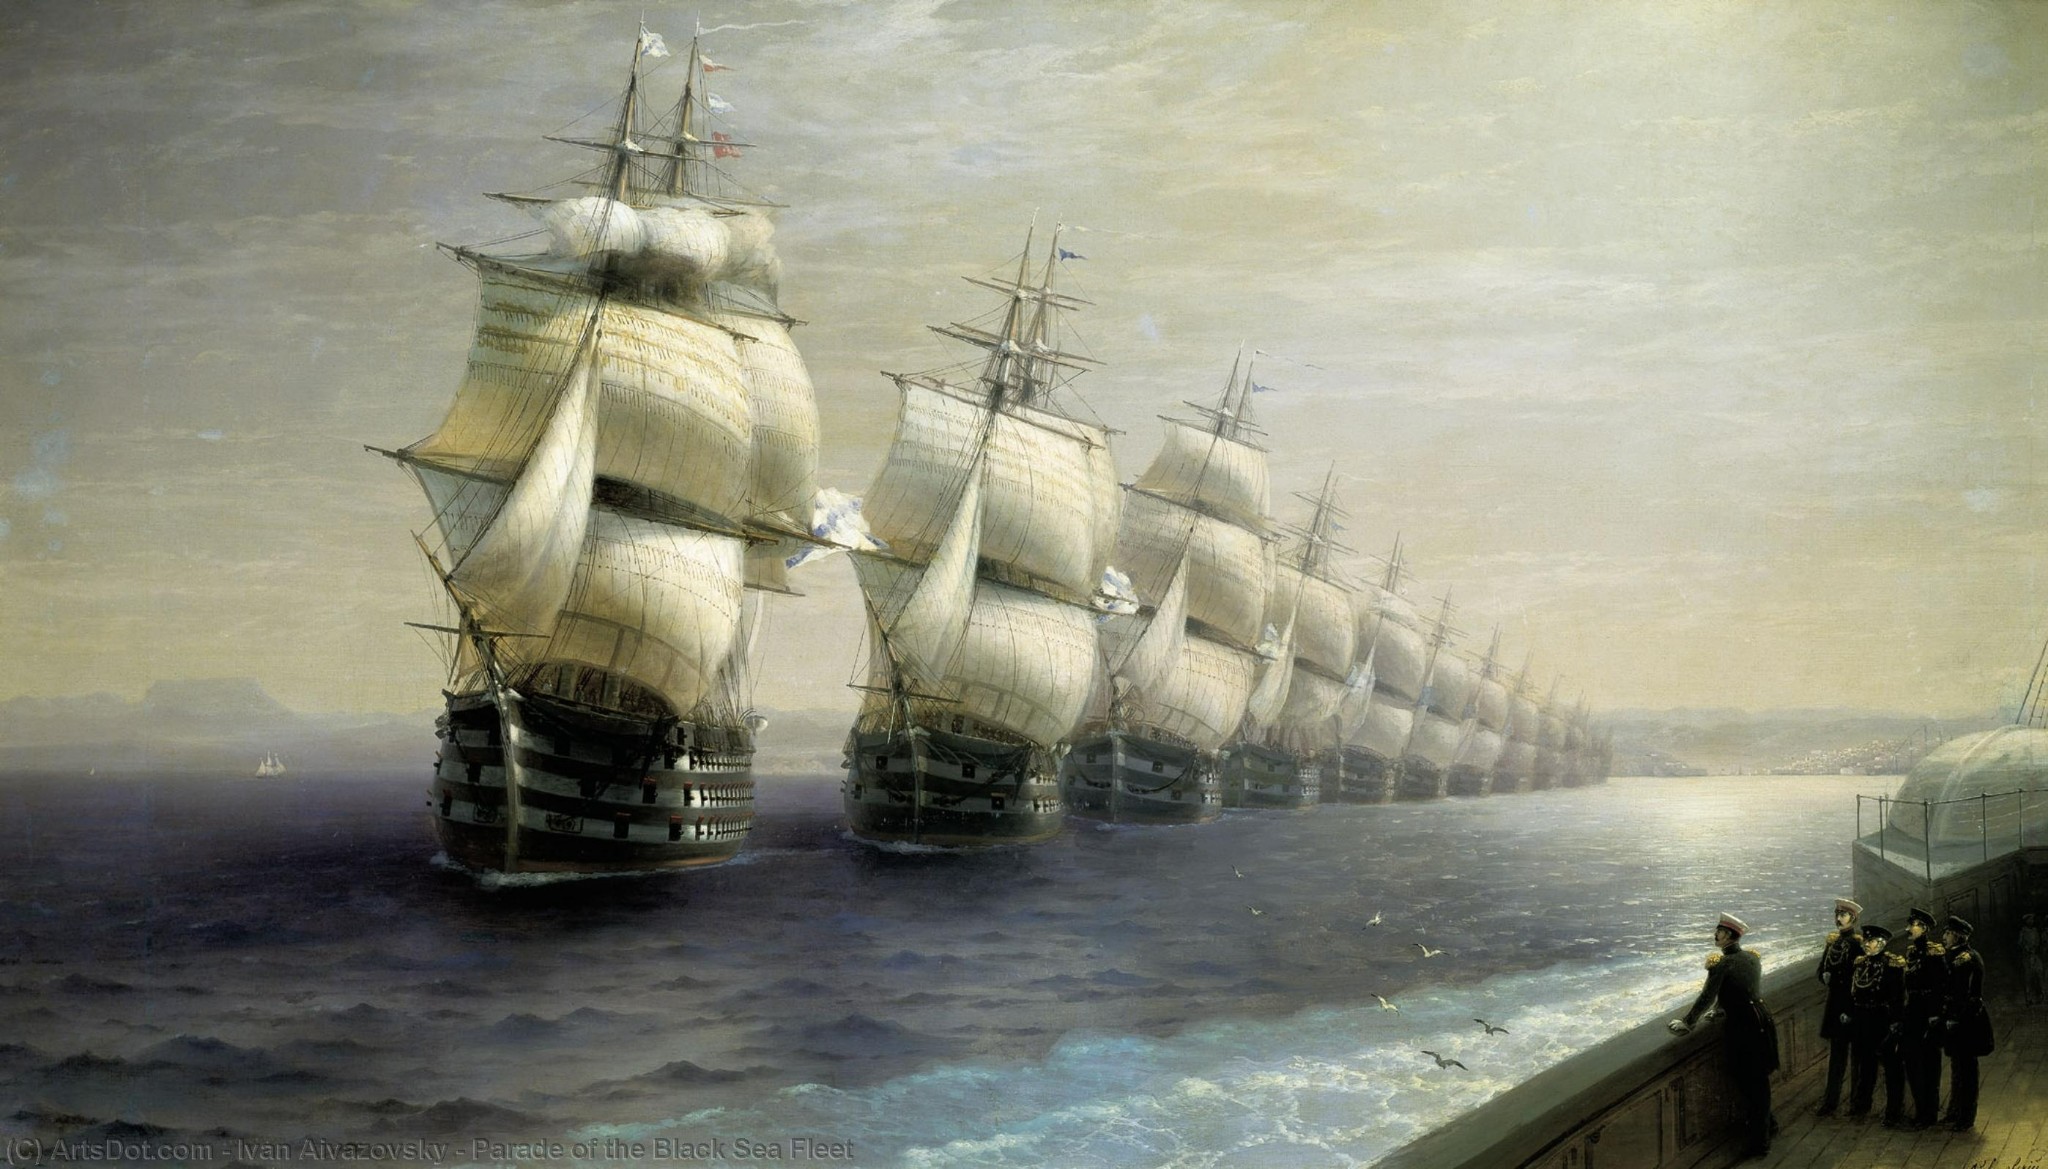 Ivan-aivazovsky-parade-of-the-black-sea-fleet.jpg